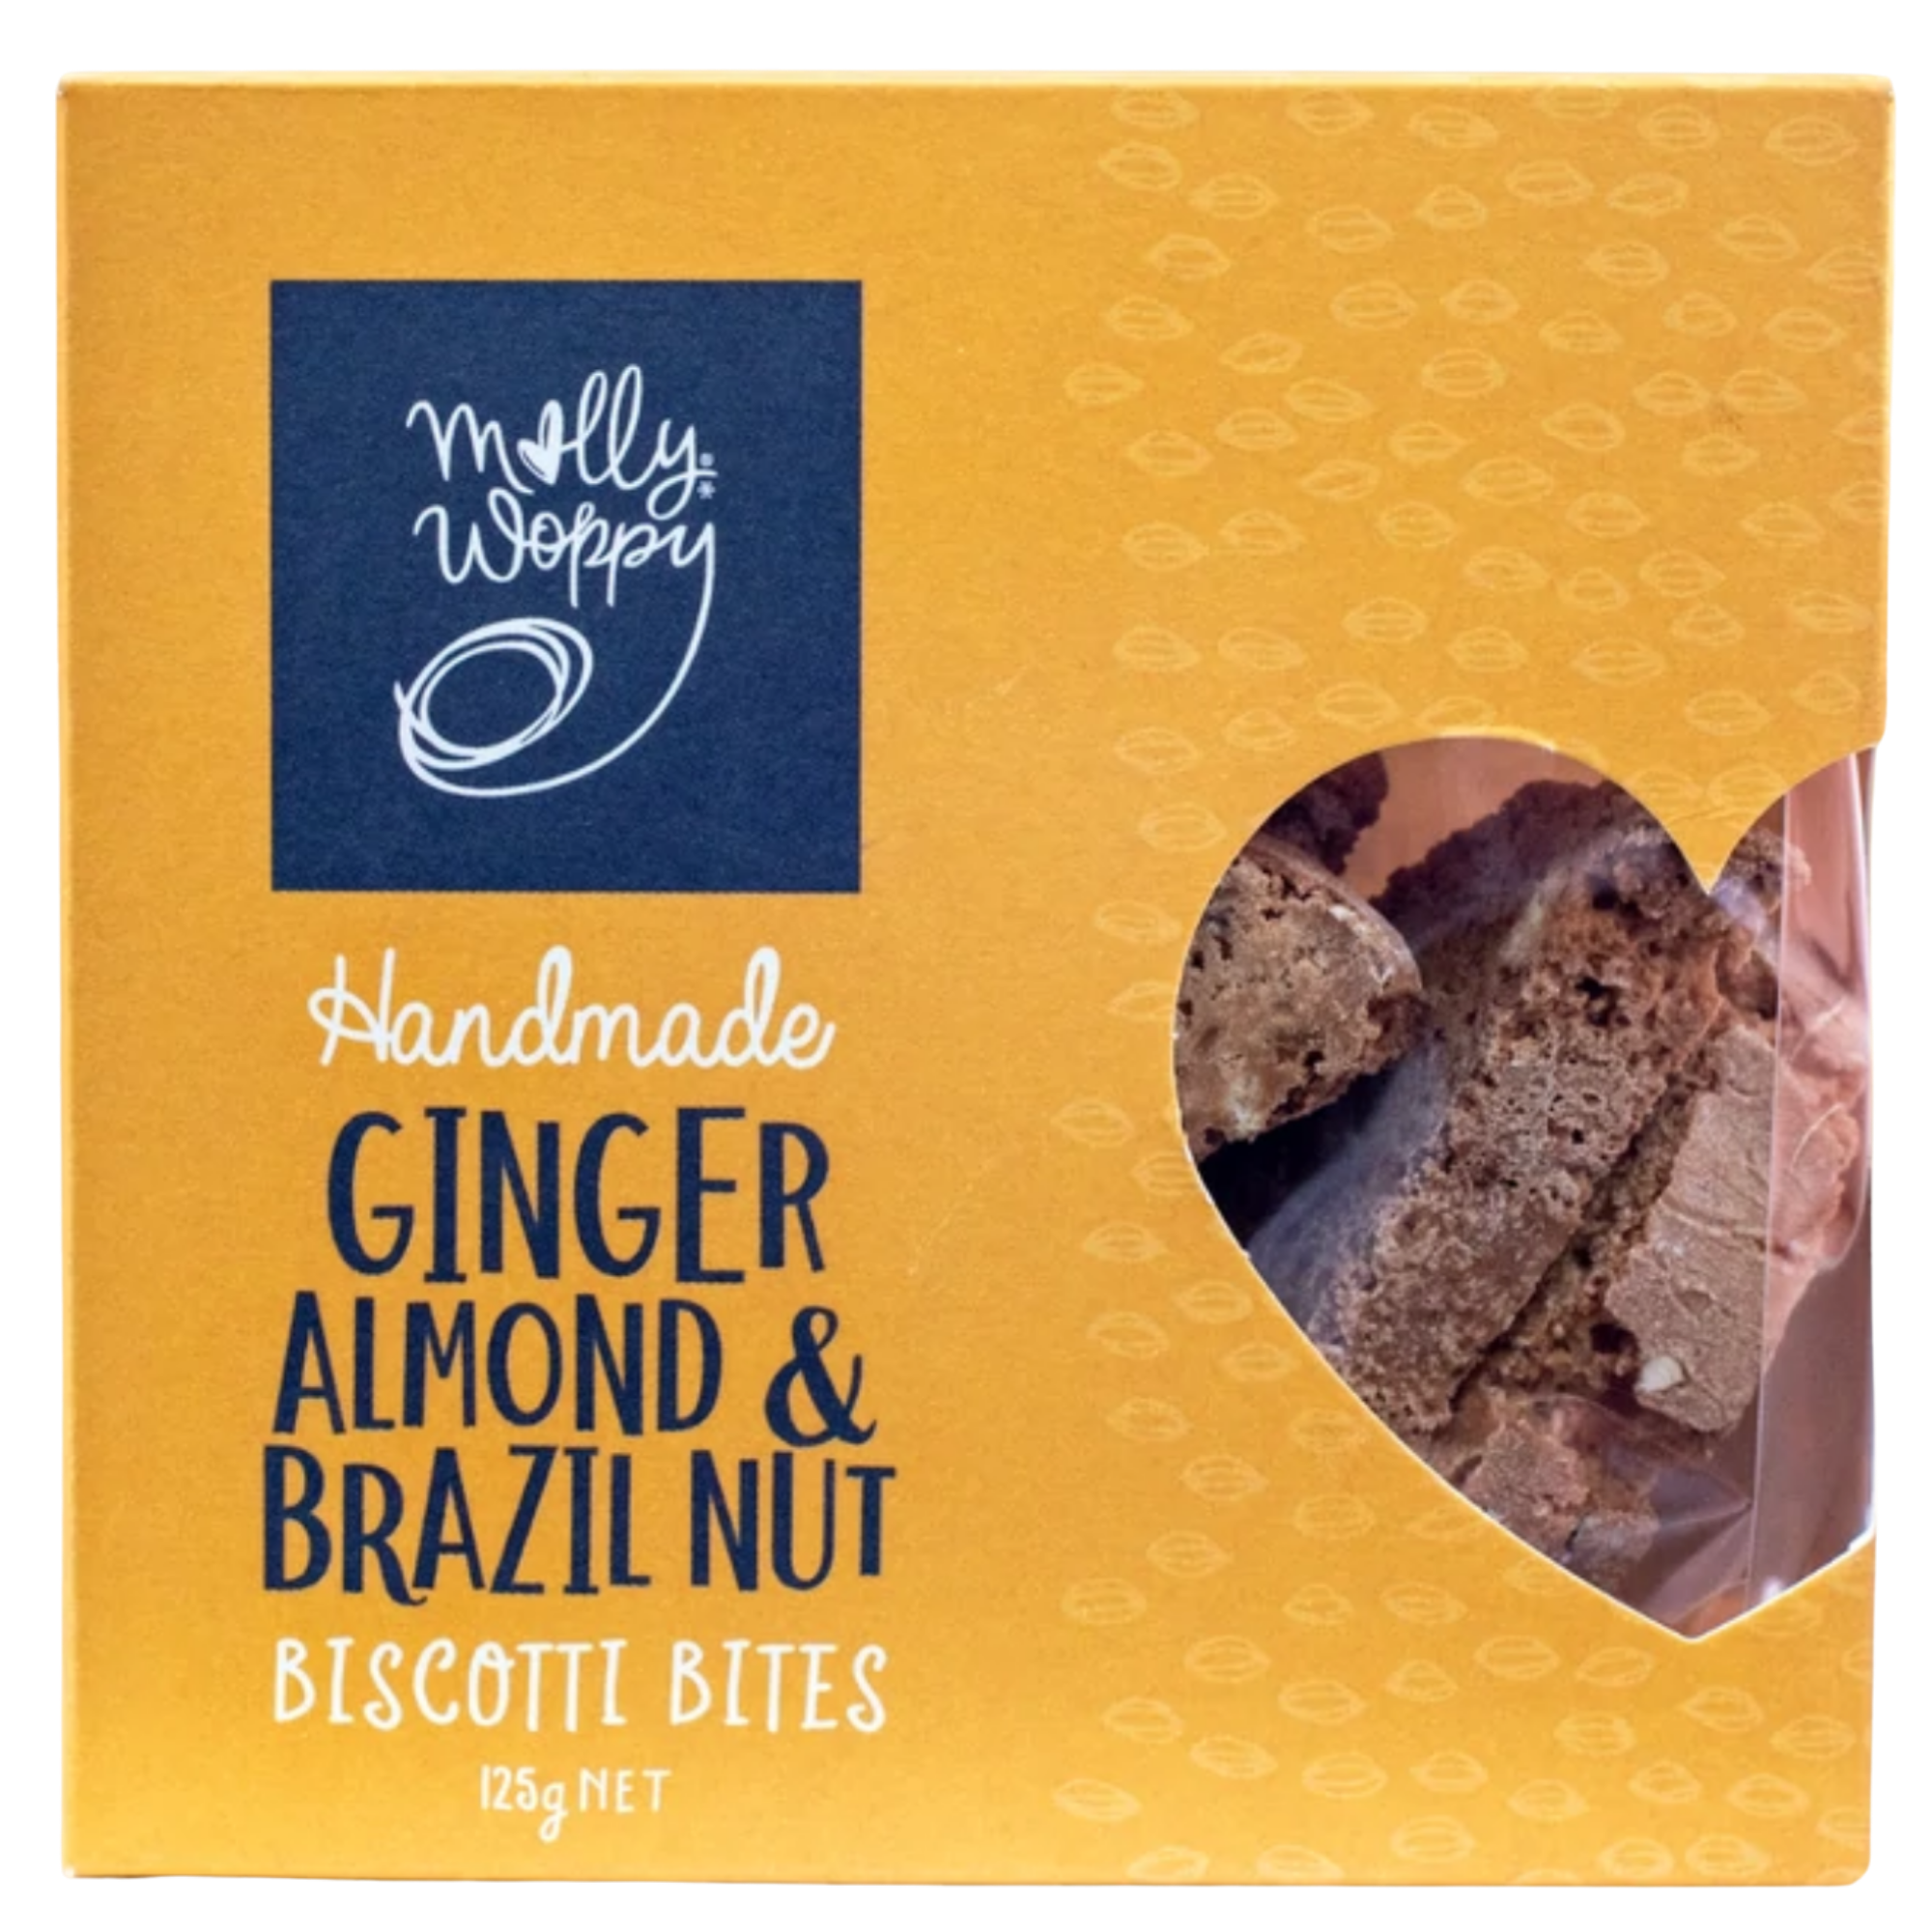 Molly Woppy Handmade Ginger, Almond & Brazil Nut Biscotti - Beautiful Gifts